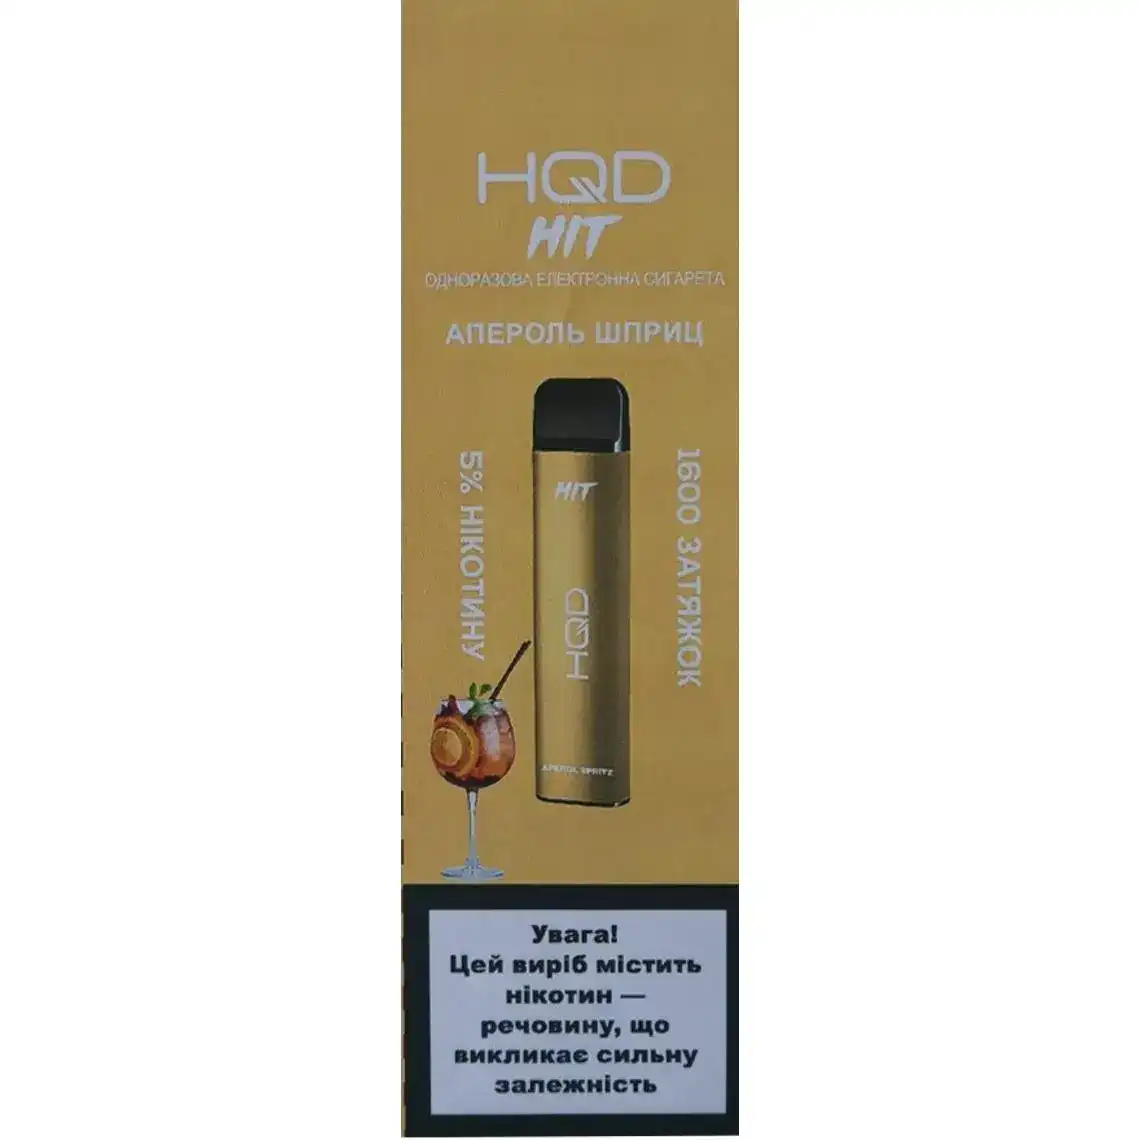 Одноразова електронна сигарета HQD Hit Апероль Шприц 1600 затяжок